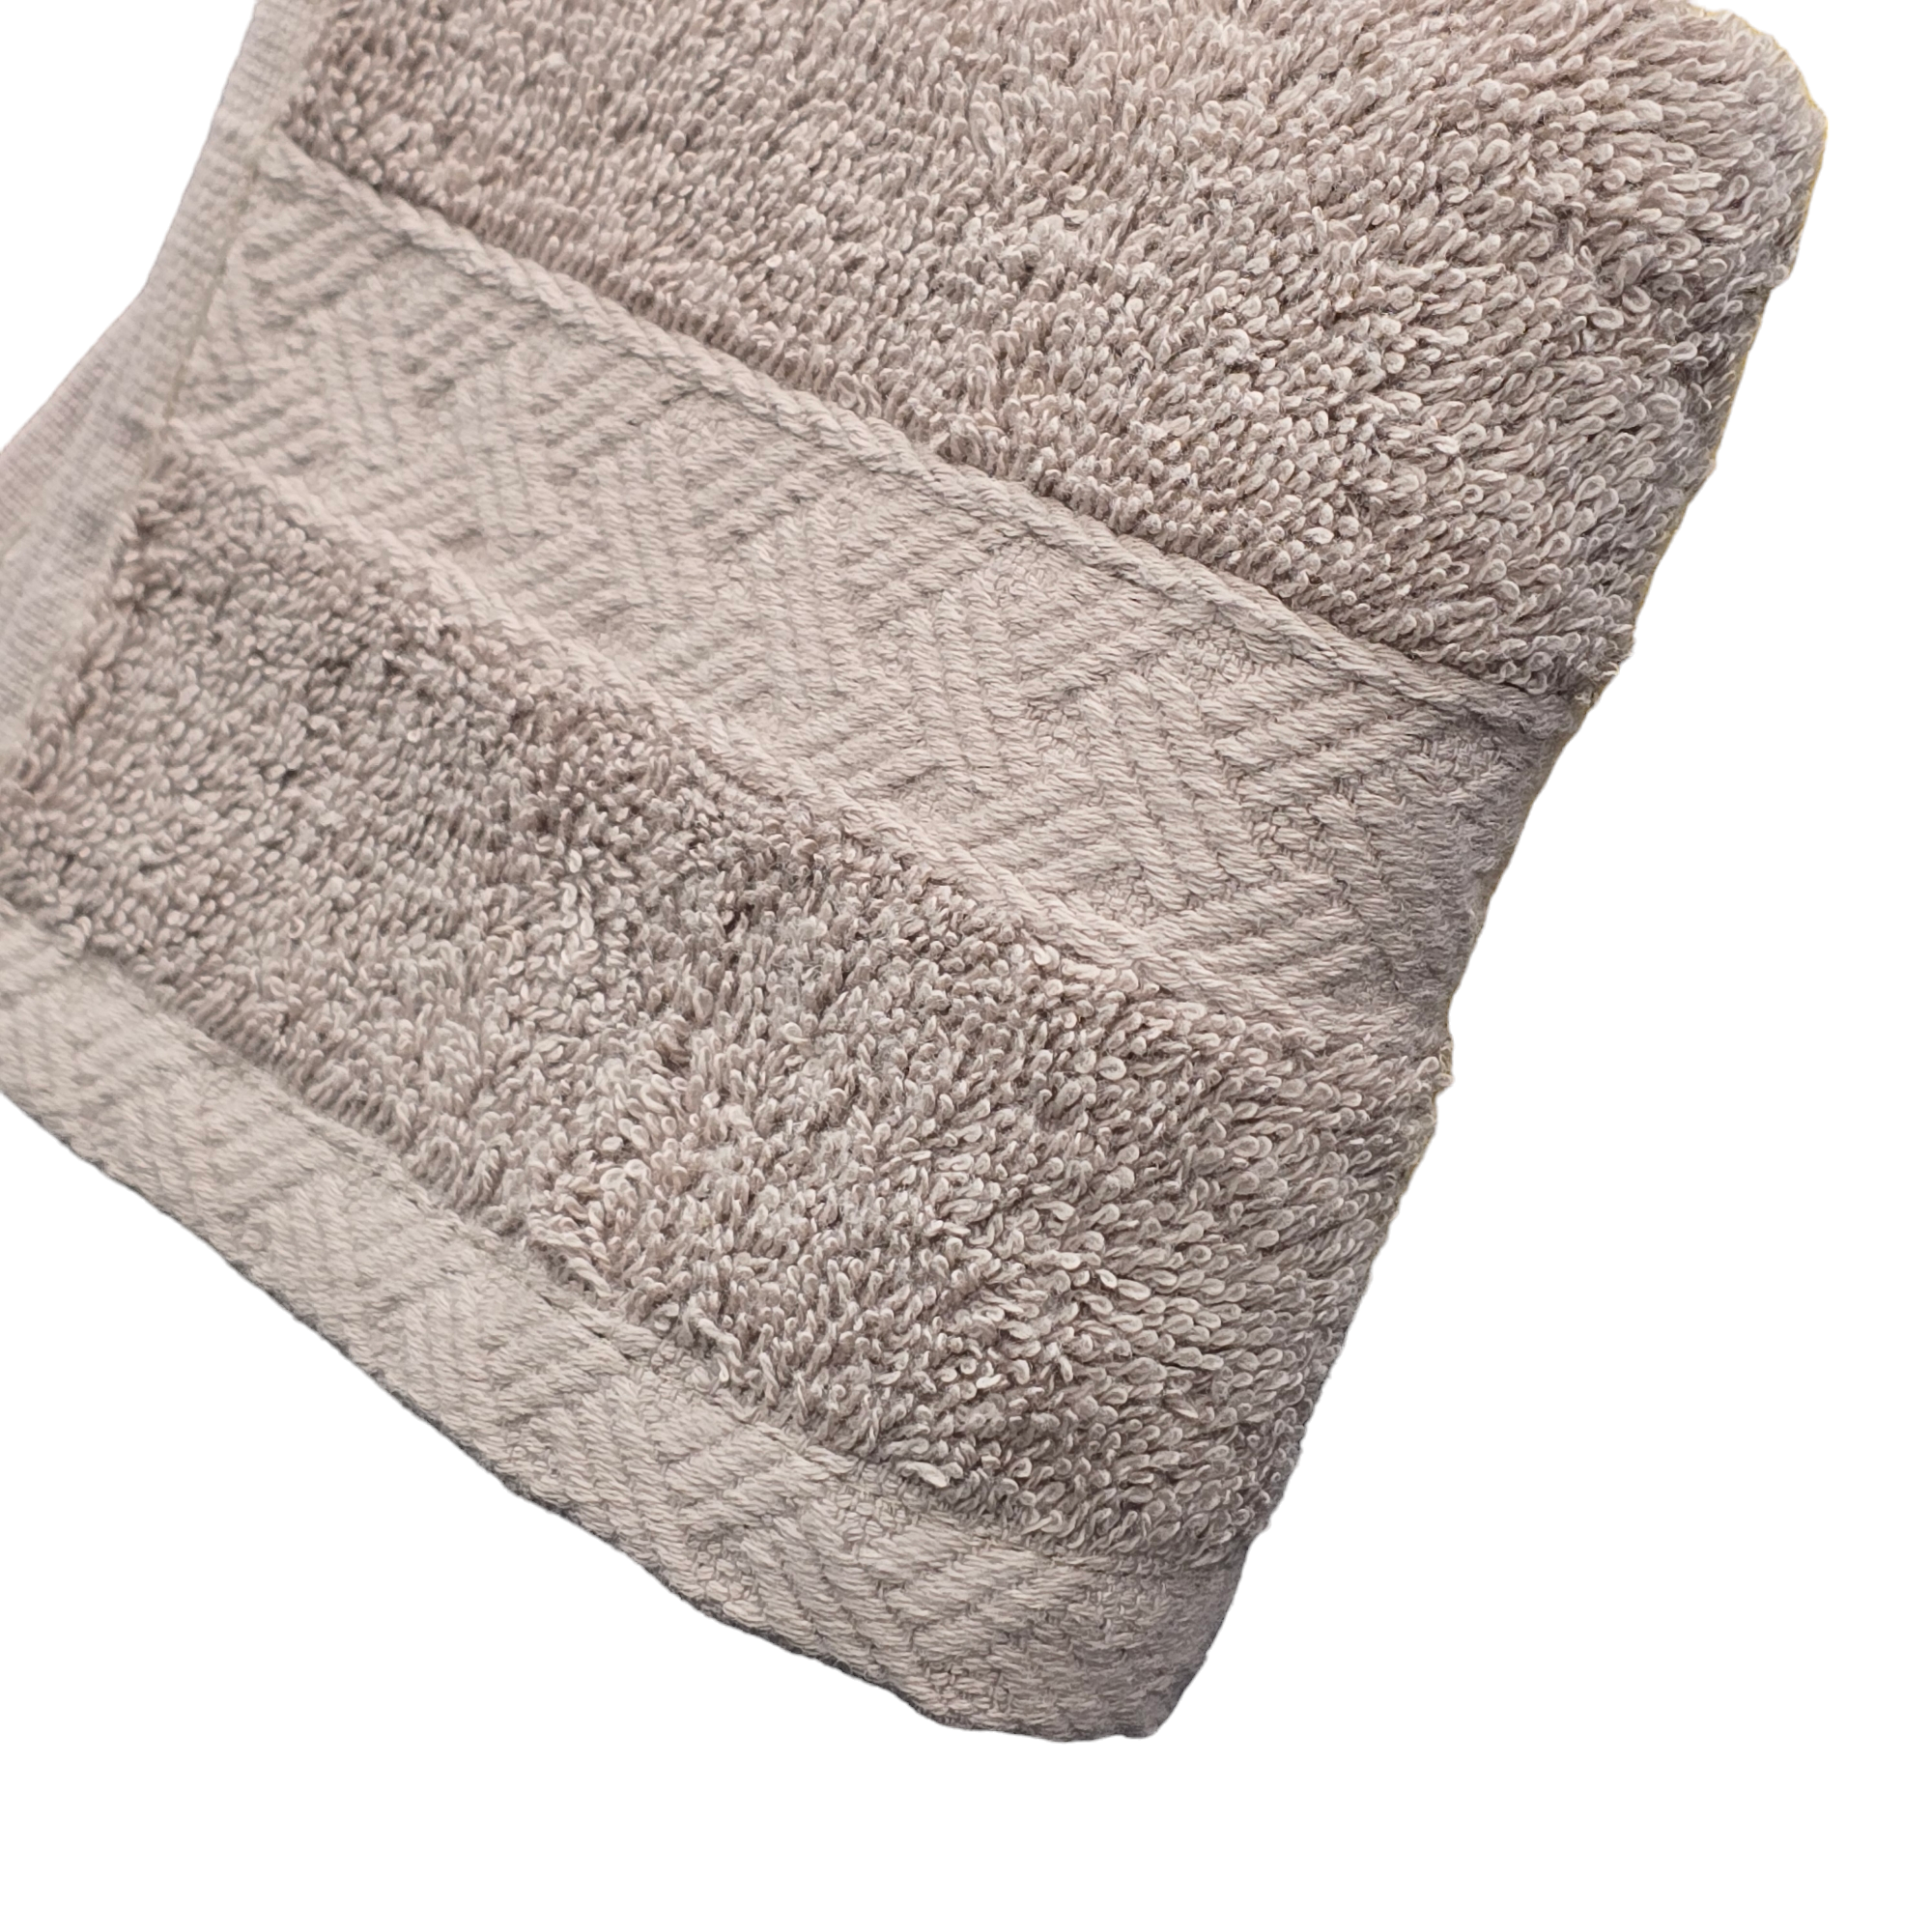 Nortex Indulgence Guest Towels